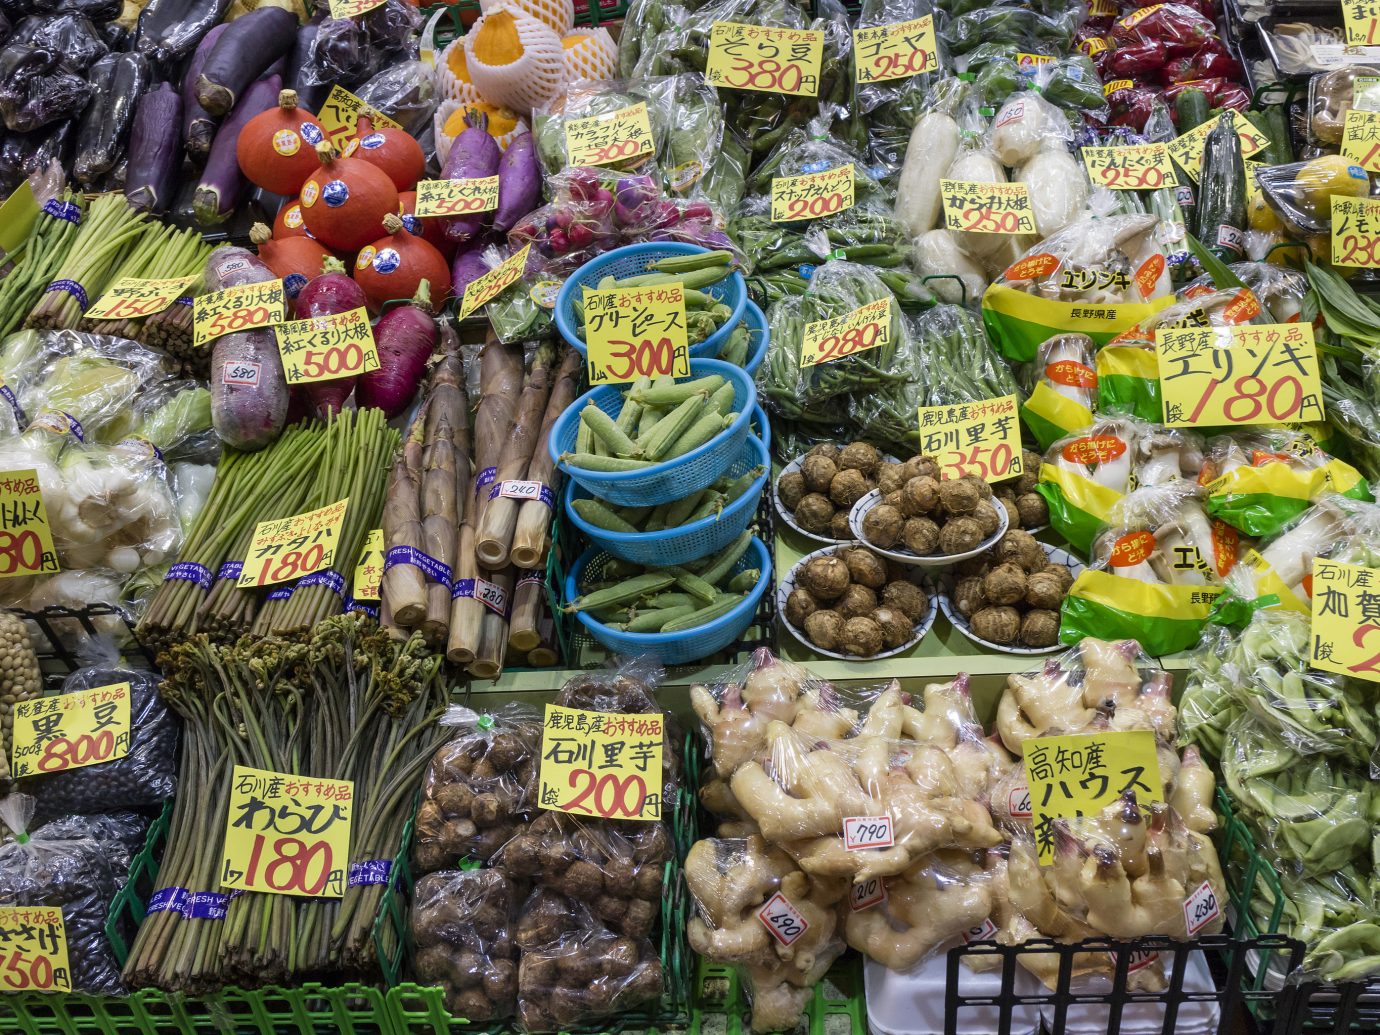 Japan Trip Ideas produce natural foods local food marketplace vegetable greengrocer whole food market food grocery store fruit bazaar vendor